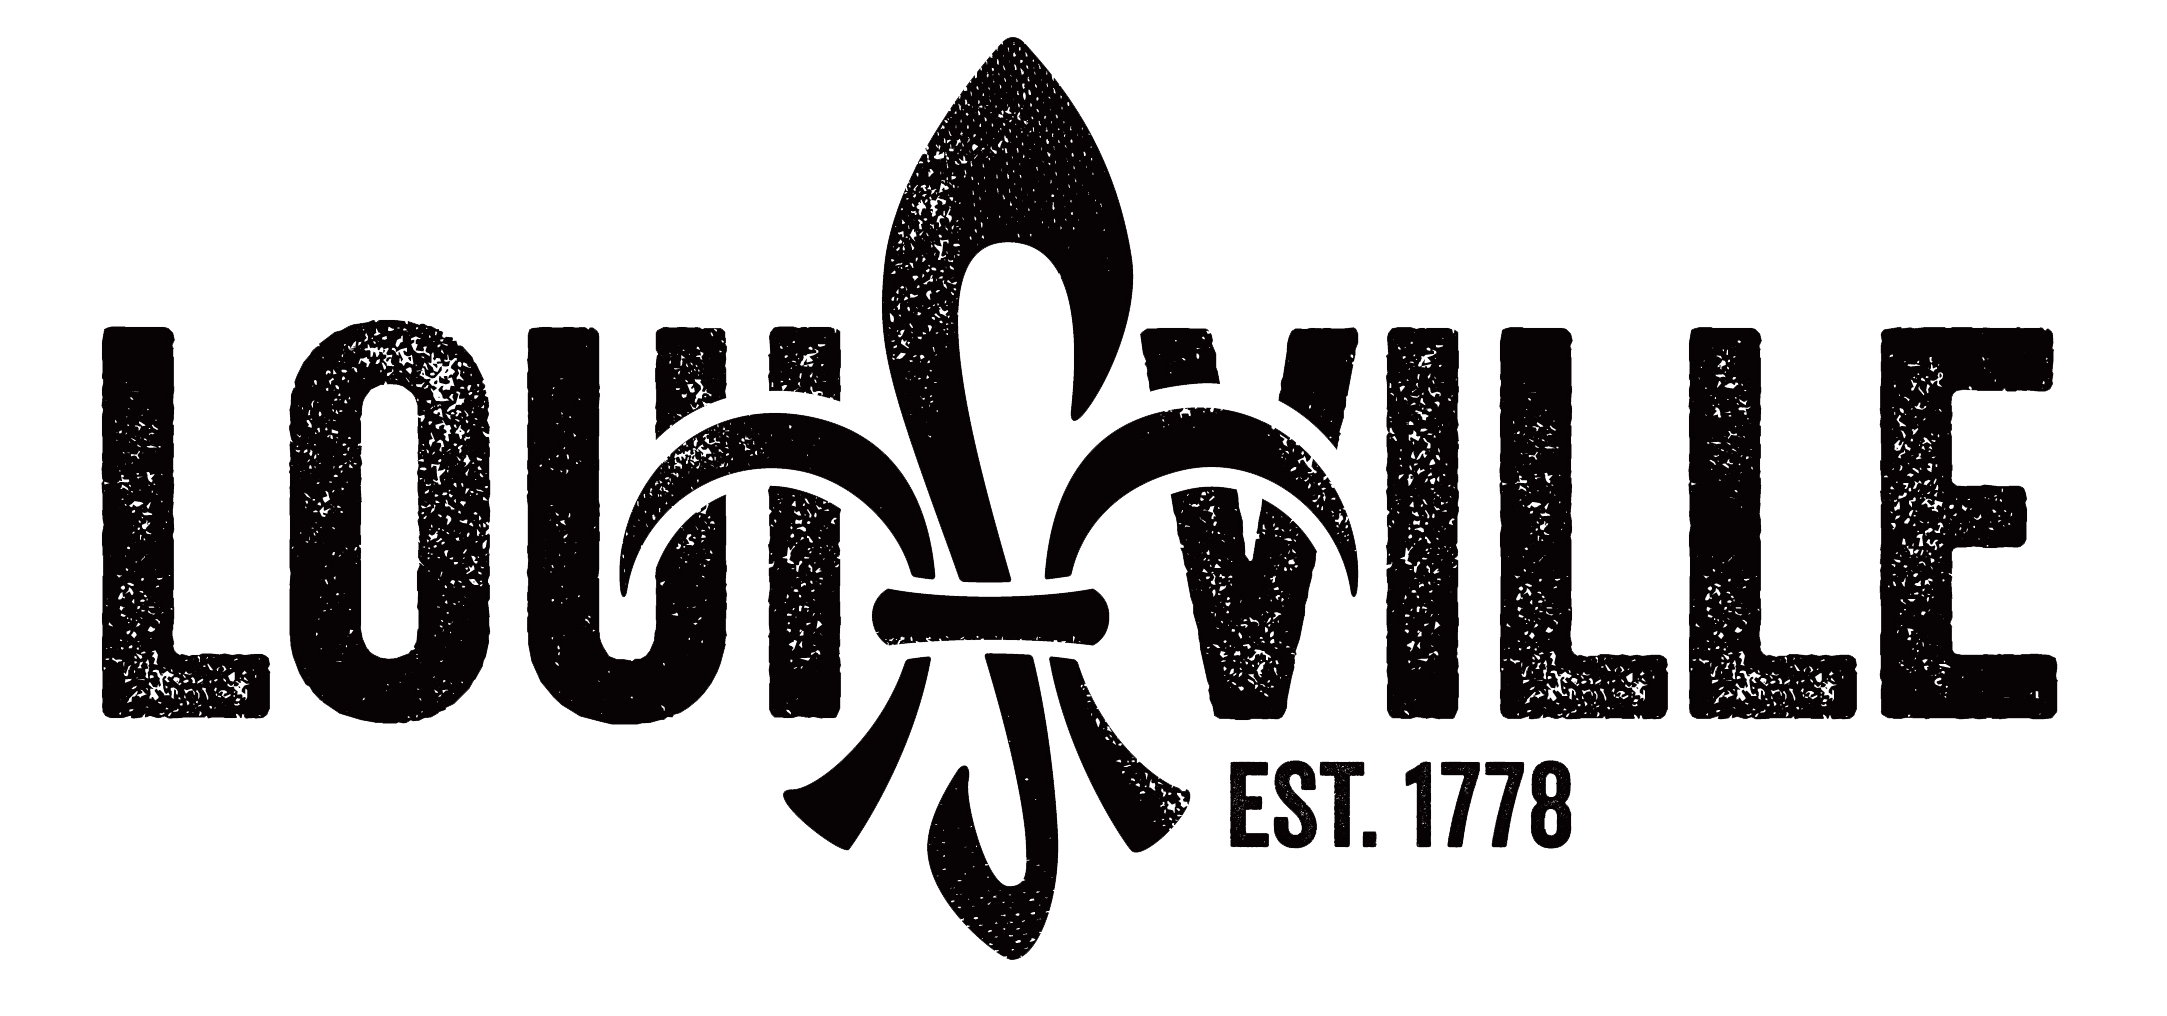 City of Louisville Logo - Directions | Louisville Zoo